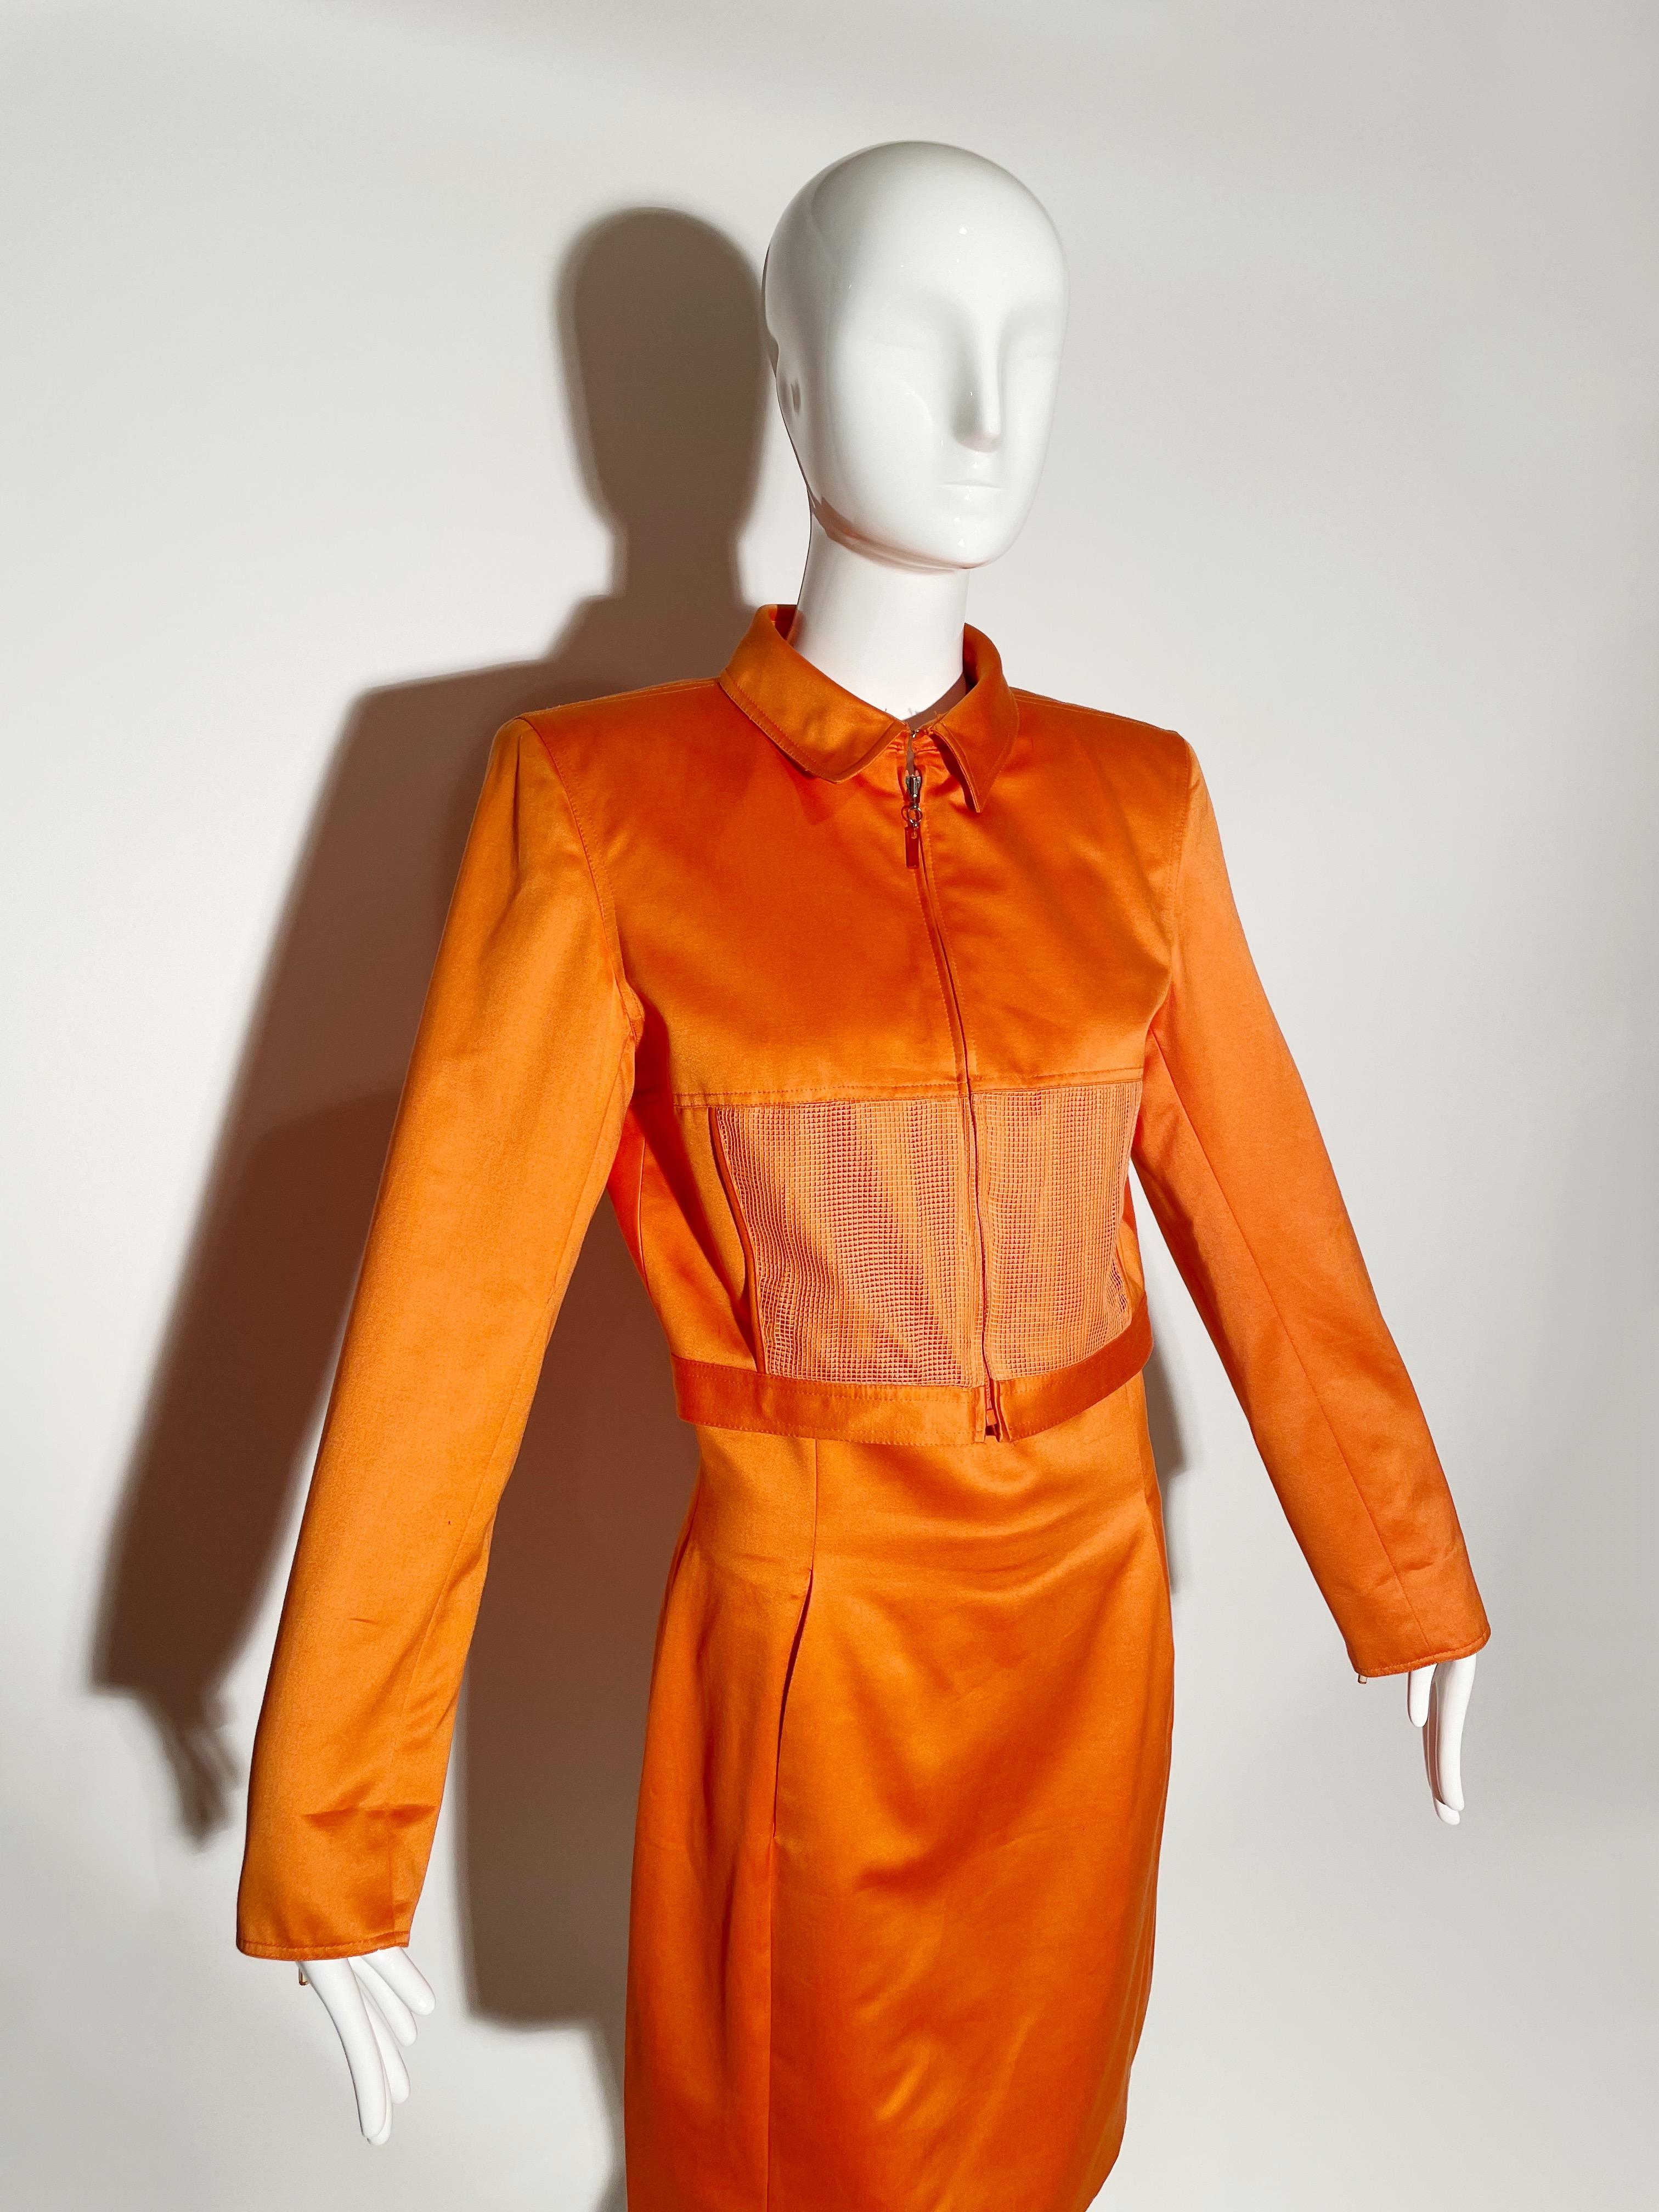 Women's Claude Montana Orange Skirt Suit  For Sale